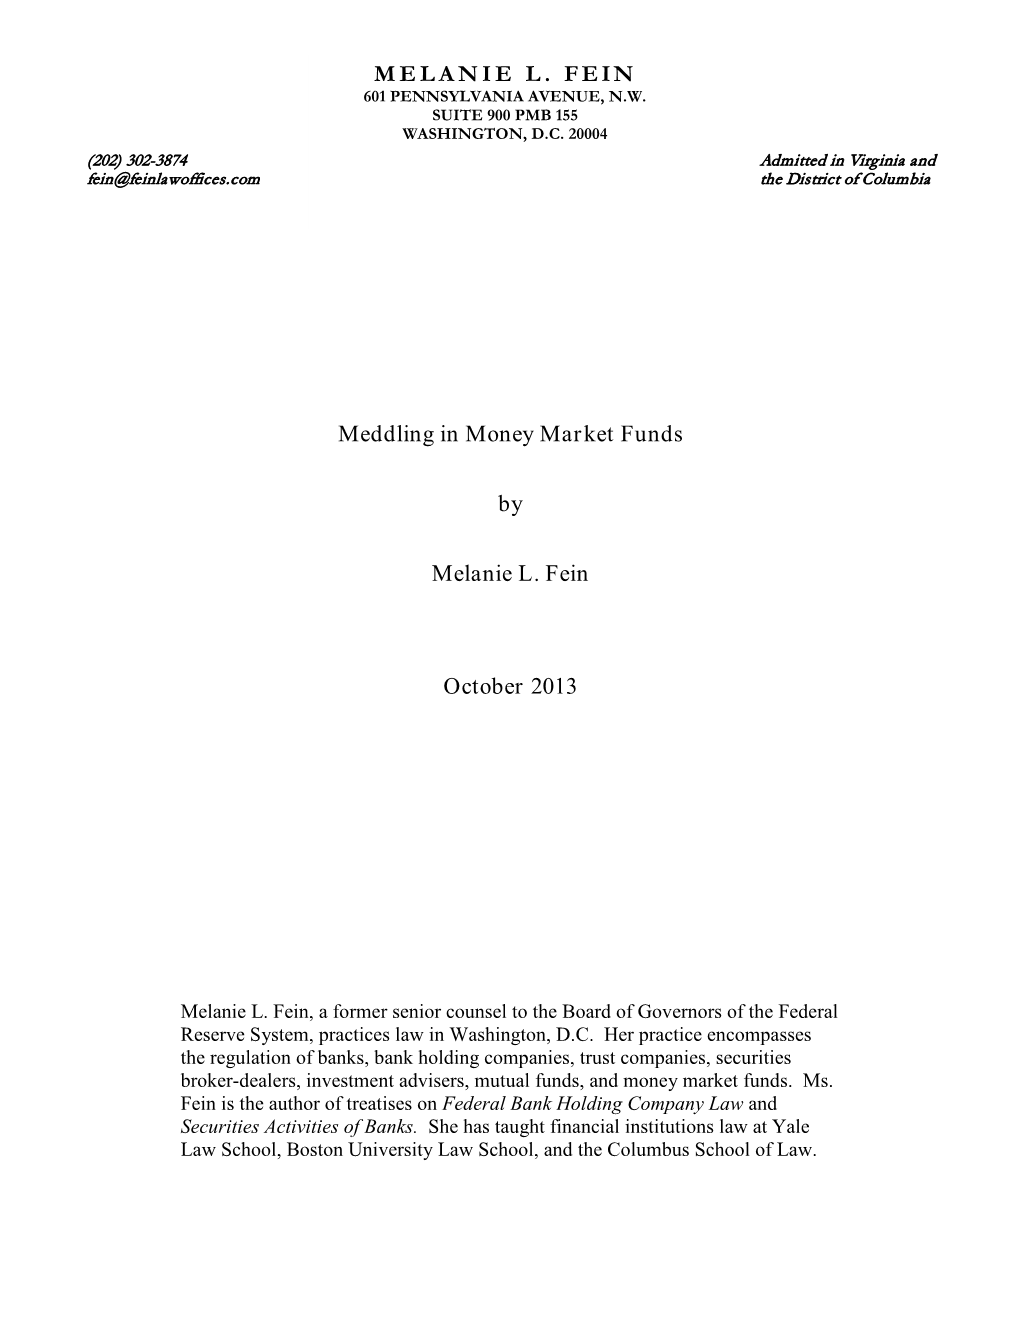 Meddling in Money Market Funds by Melanie L. Fein October